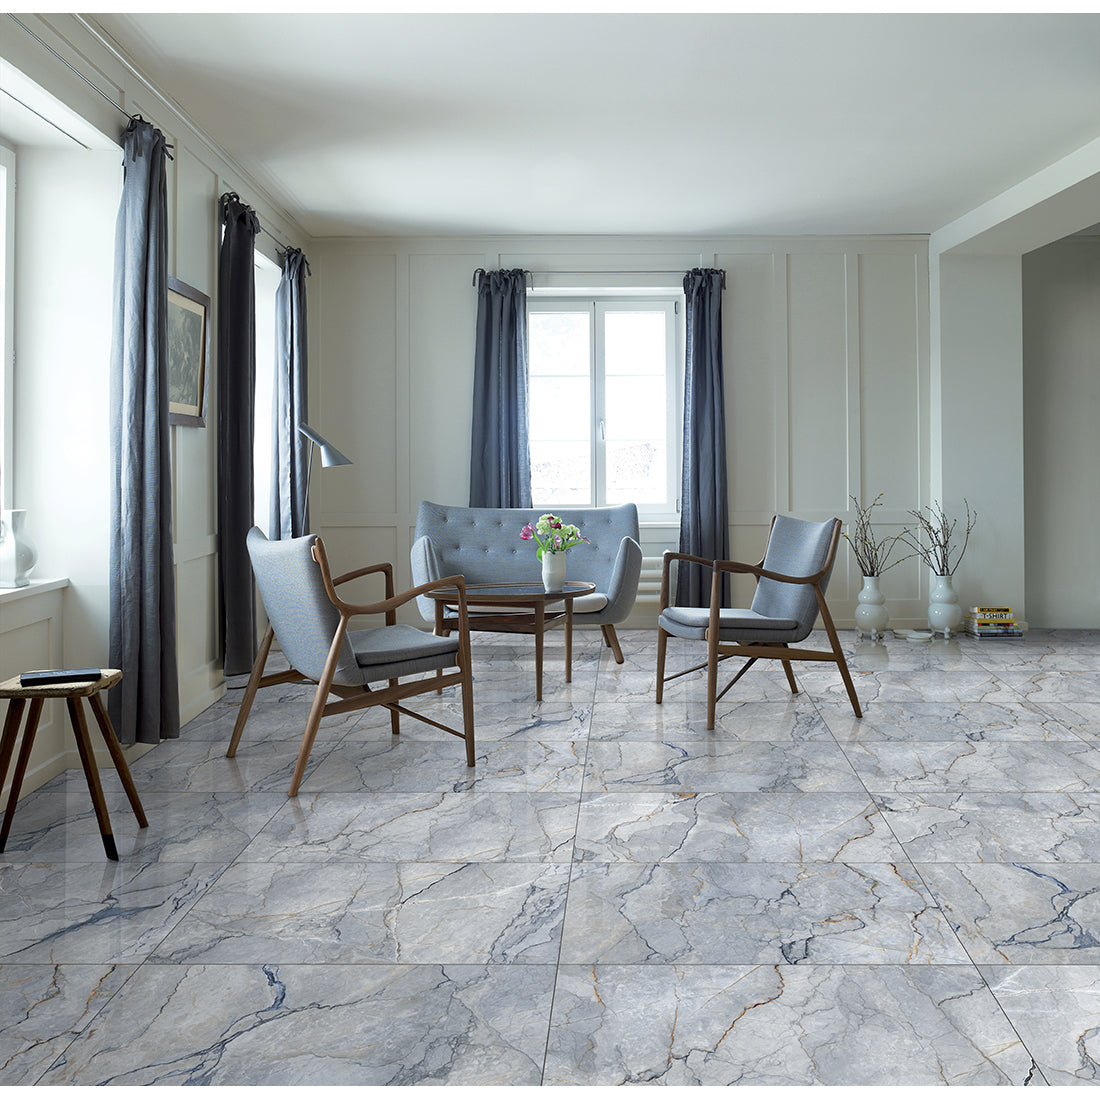 Sylvan Blue Marble Essence 60x60cm Matt Anti-Slip Porcelain Wall & Floor Tile